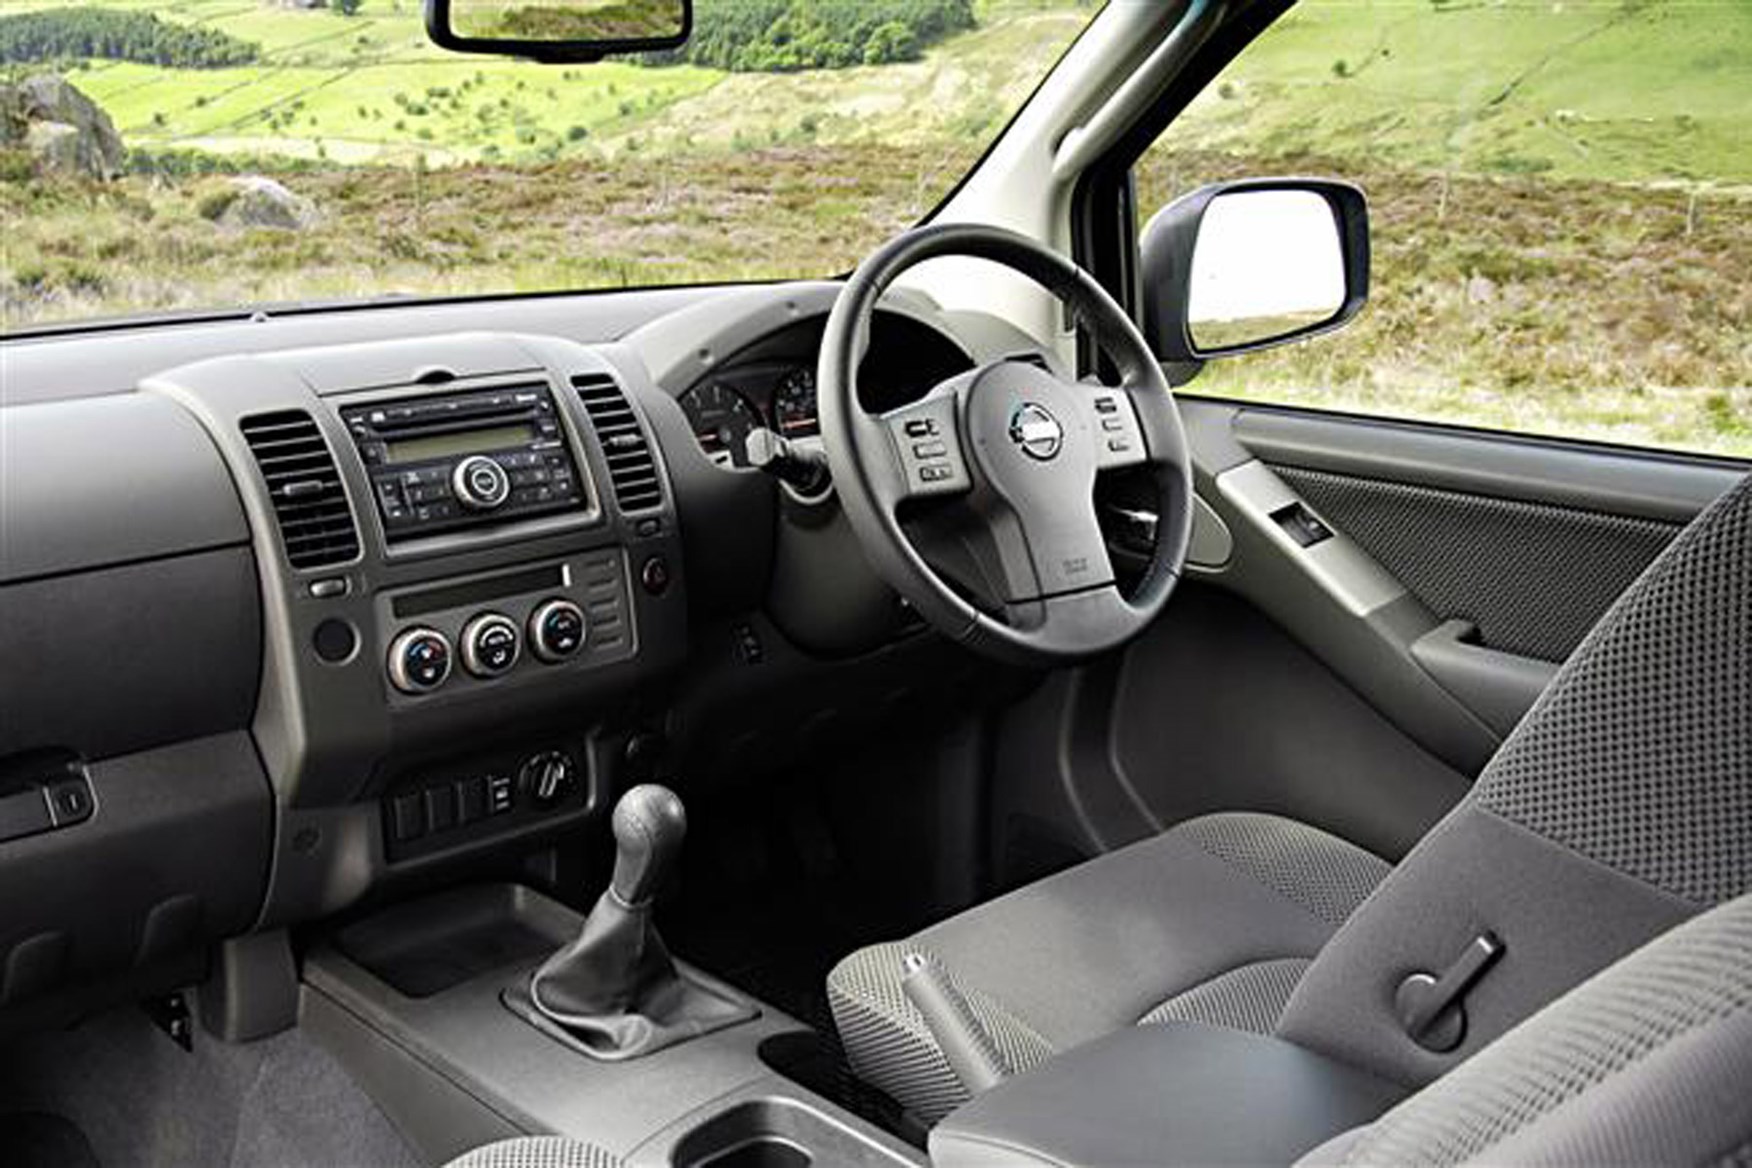 Nissan Navara 2005-2015 review on Parkers Vans - interior